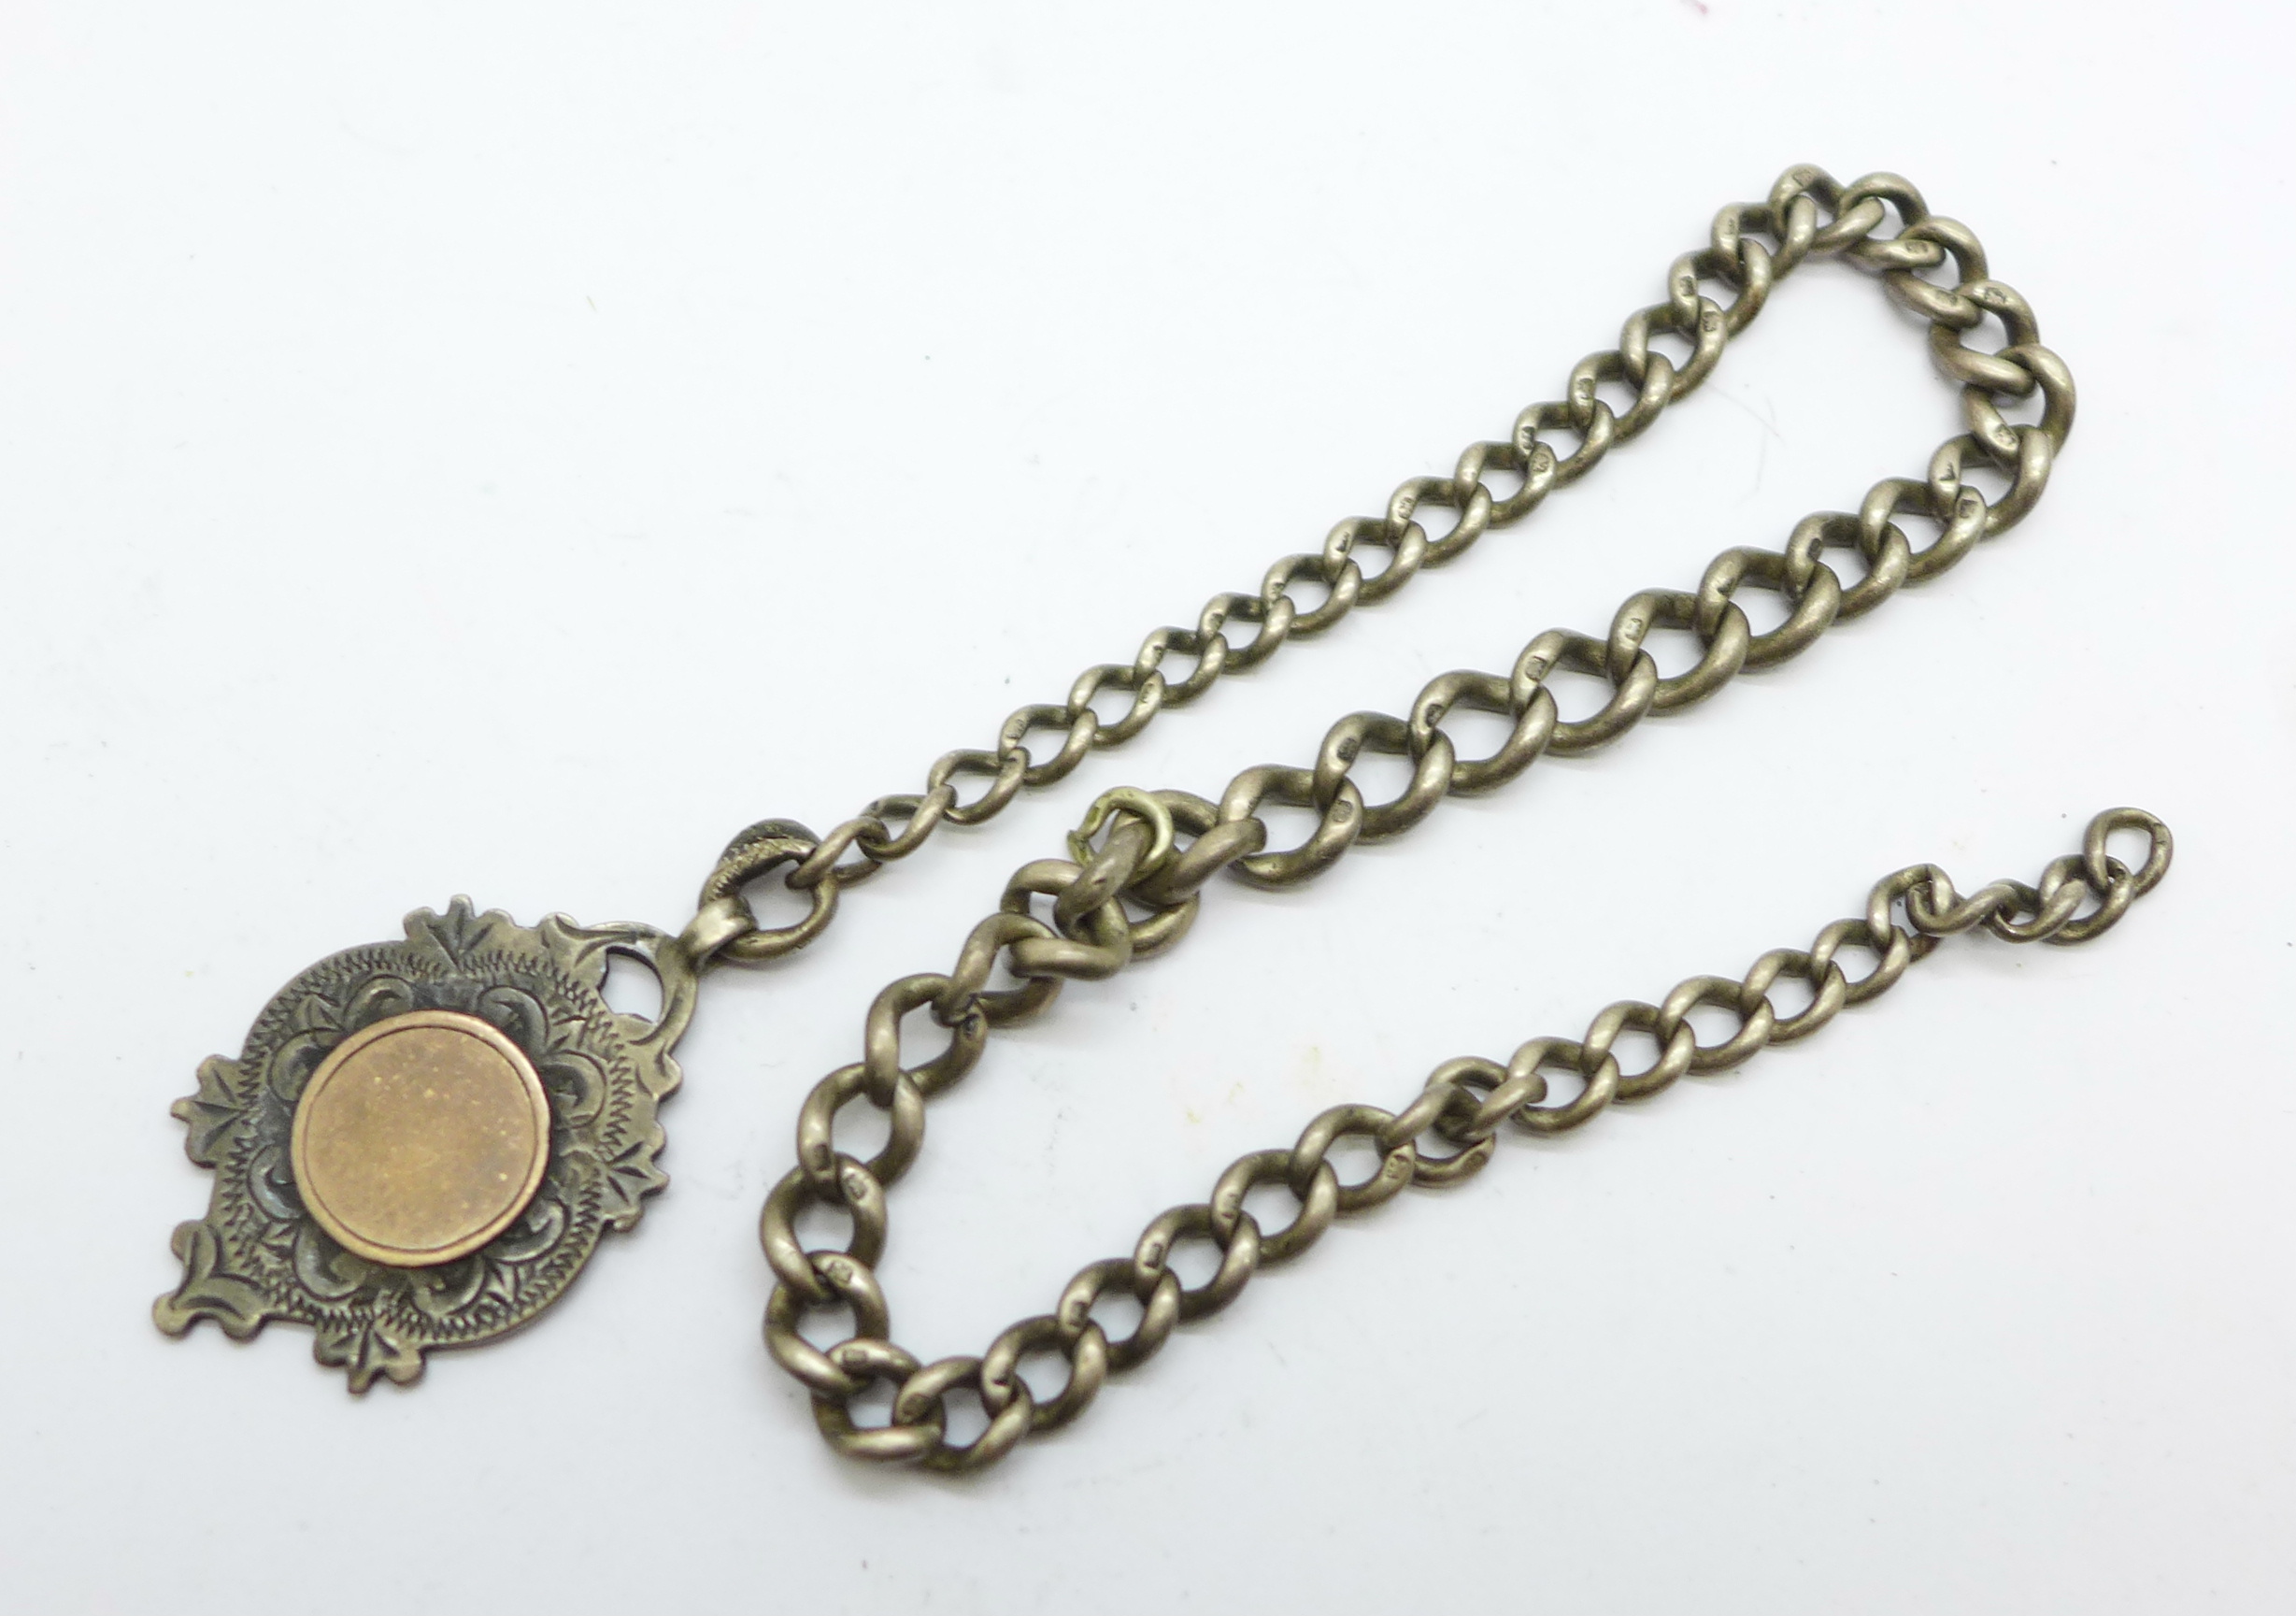 A silver chain with silver fob, no clip, 33g